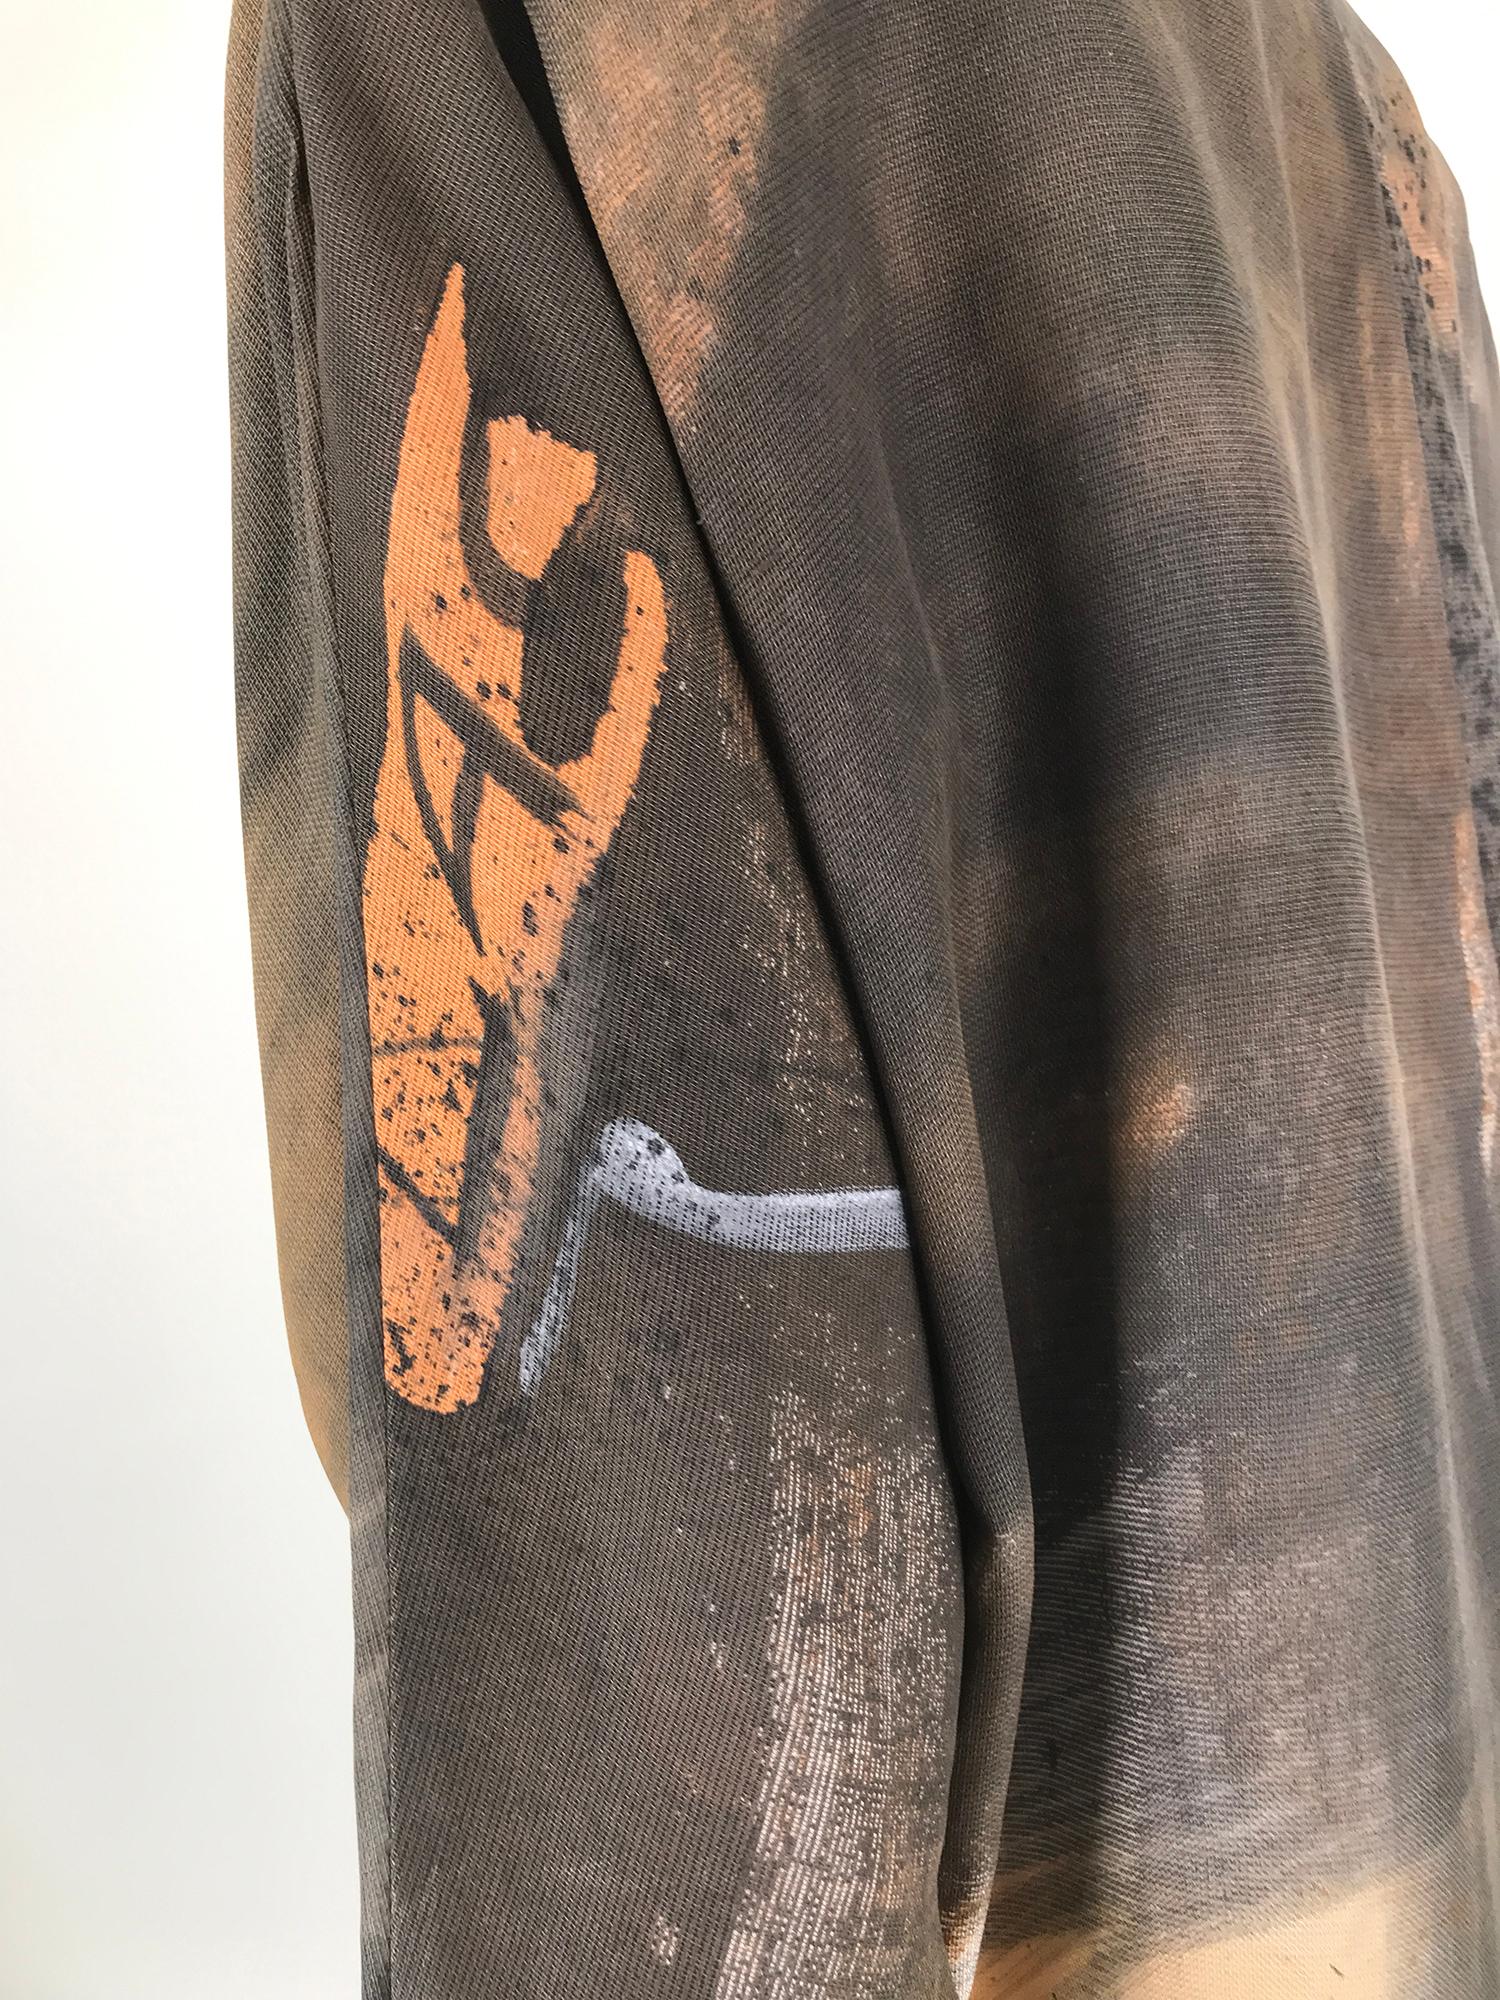 Christian Lacroix Painted Silk Button Front Bat Wing Dress 1980s 8